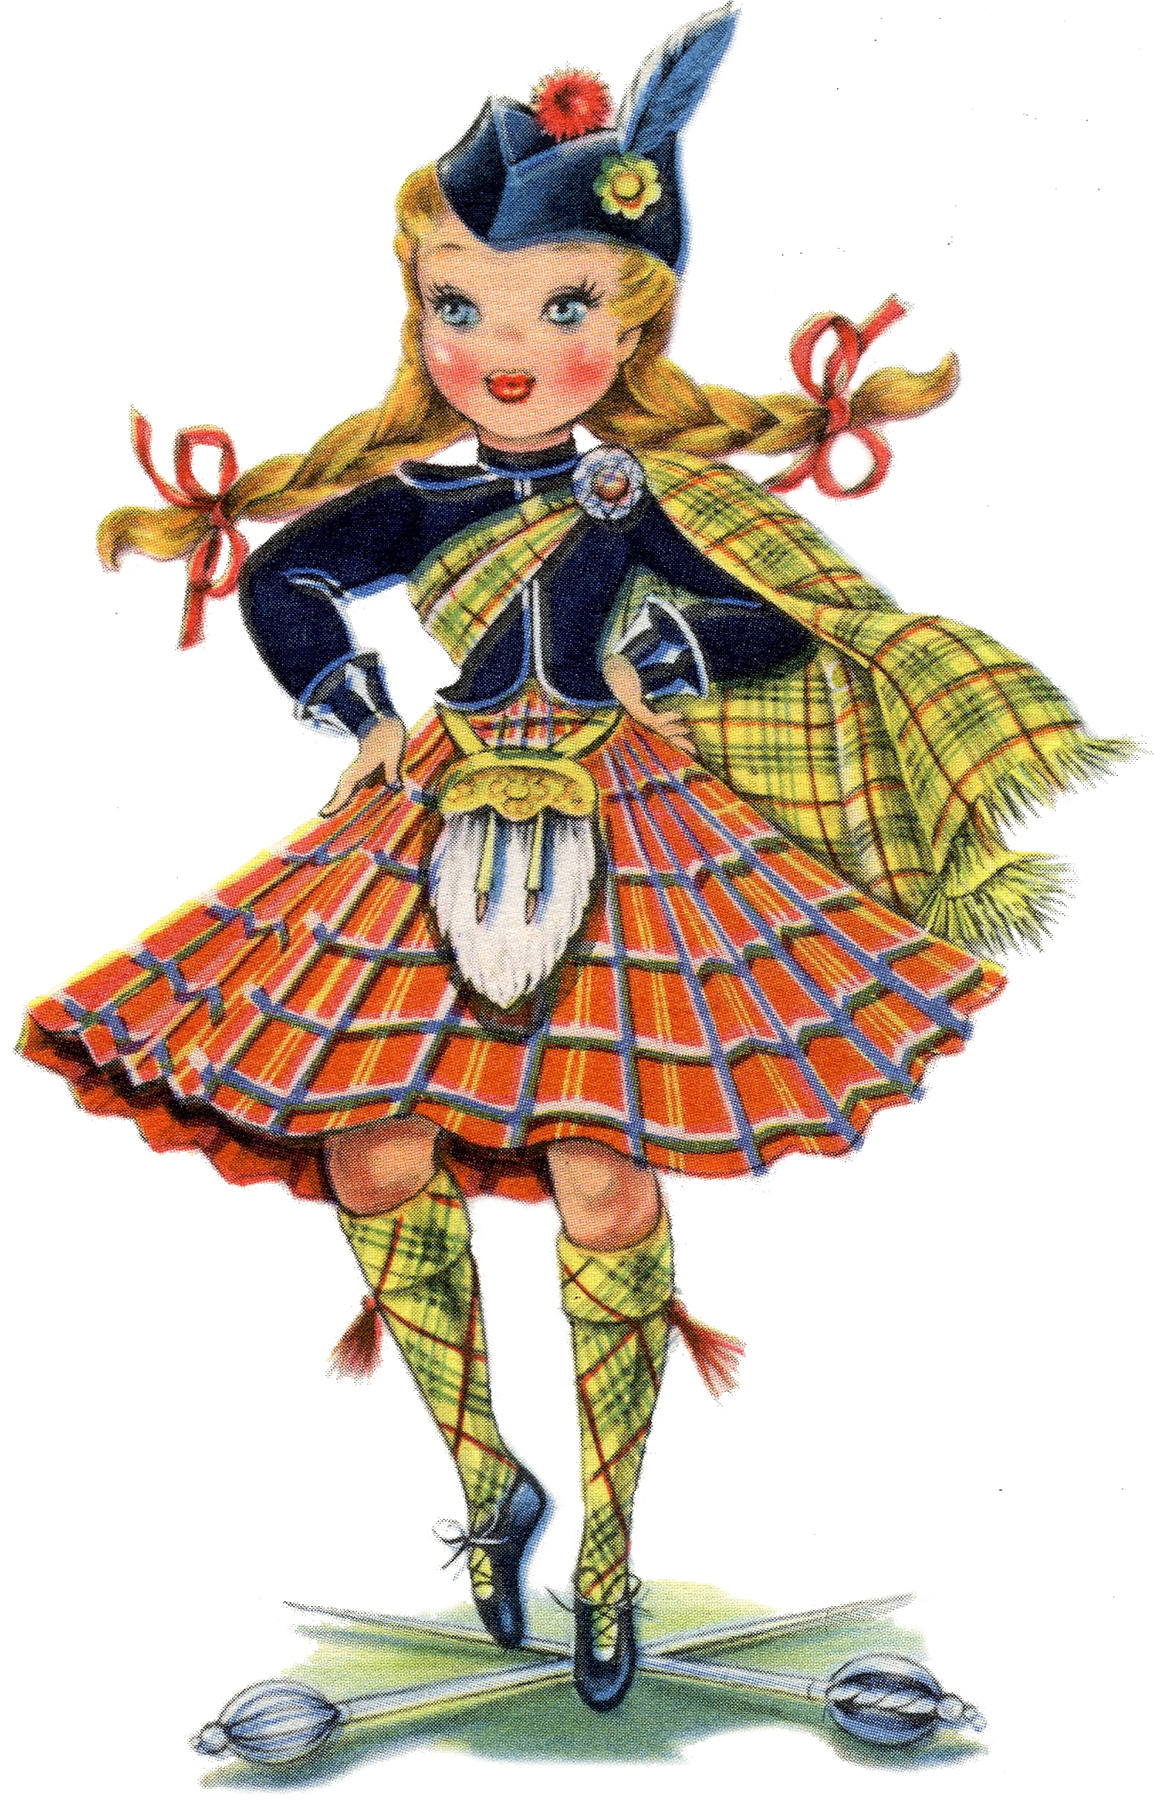 Adorable Retro Scottish Doll Image! - The Graphics Fairy